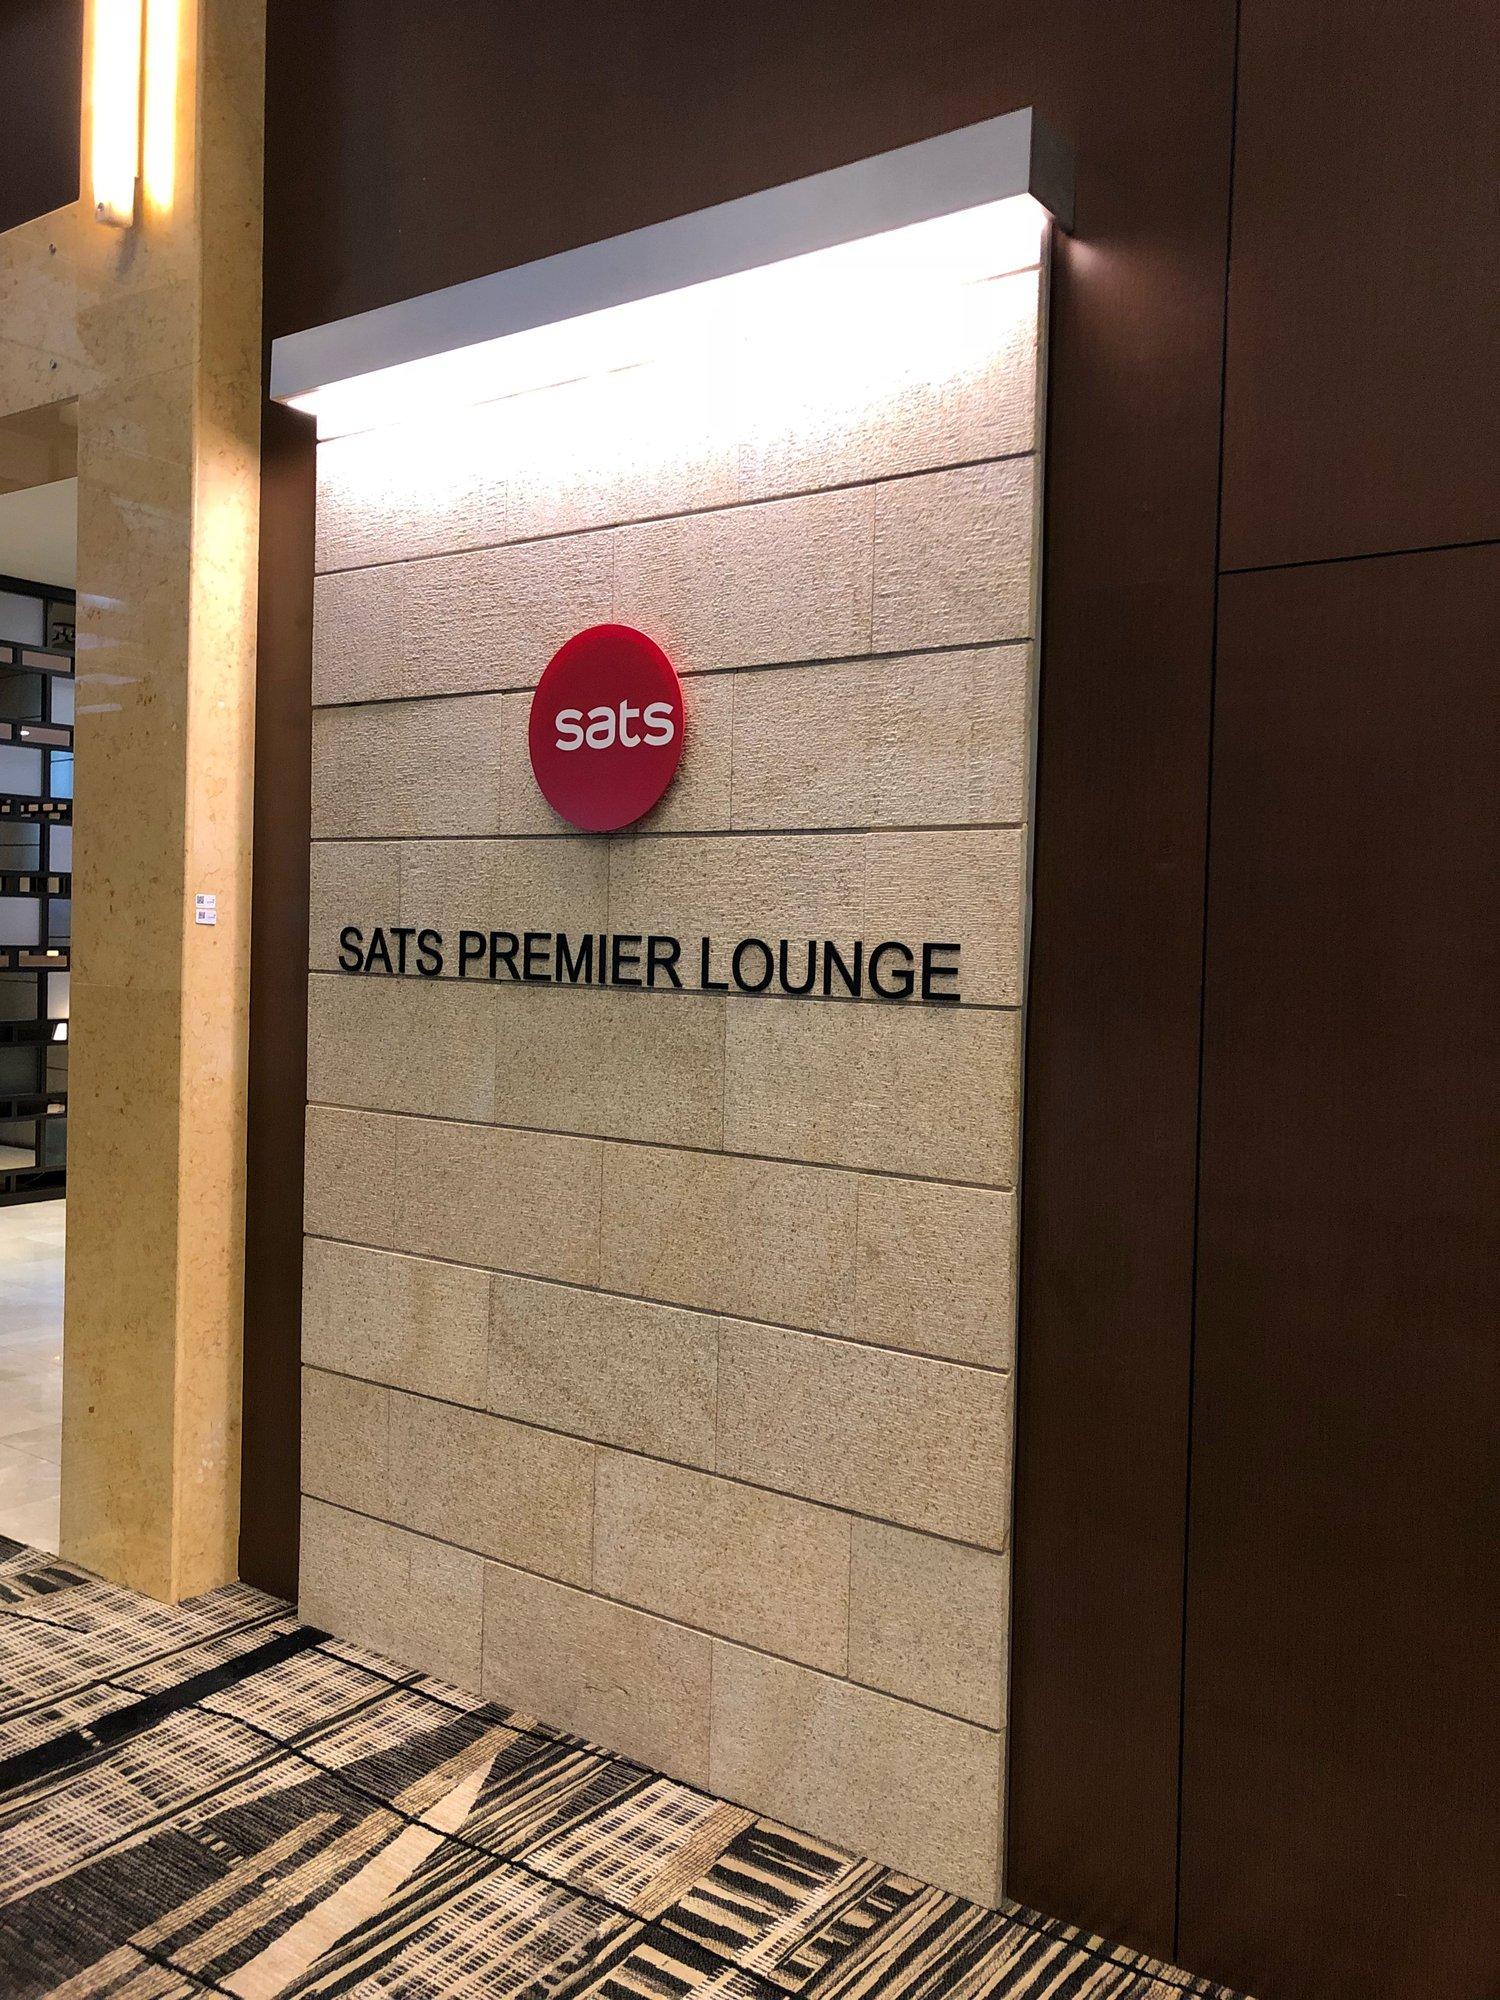 SATS Premier Lounge image 51 of 61